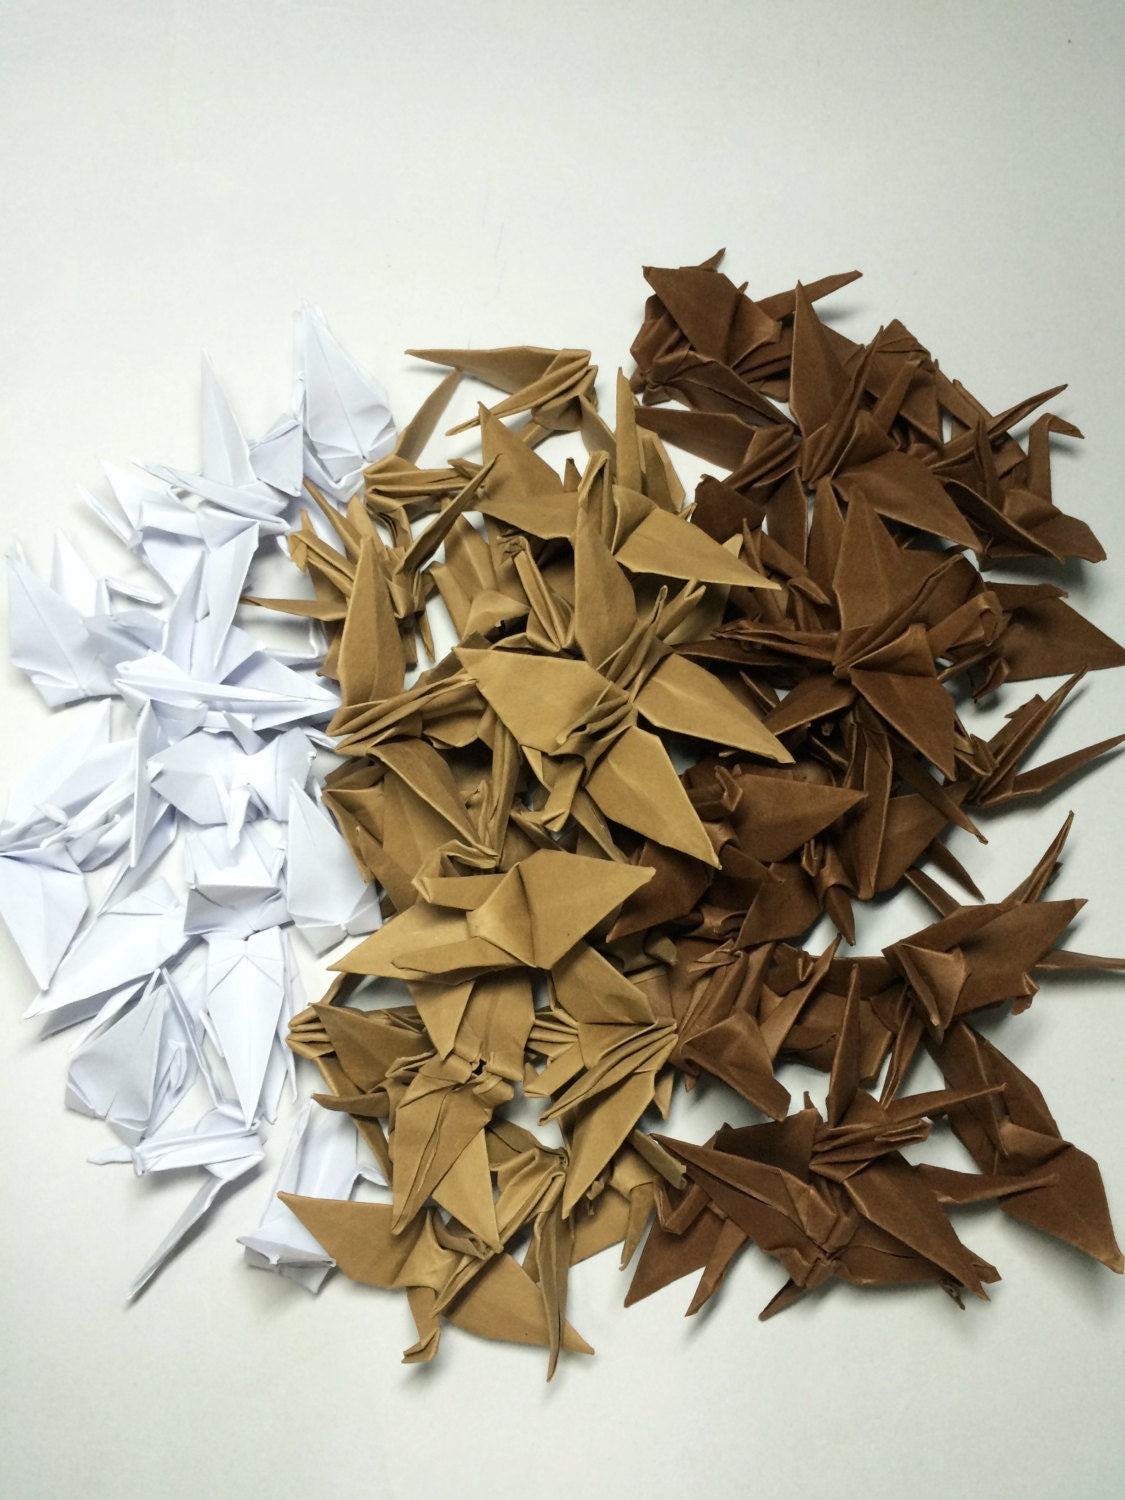 100 gru di carta origami marroni - 7,5 cm (3x3 pollici) - prefabbricate - gru origami per decorazioni di nozze, regali di anniversario, San Valentino, fondale